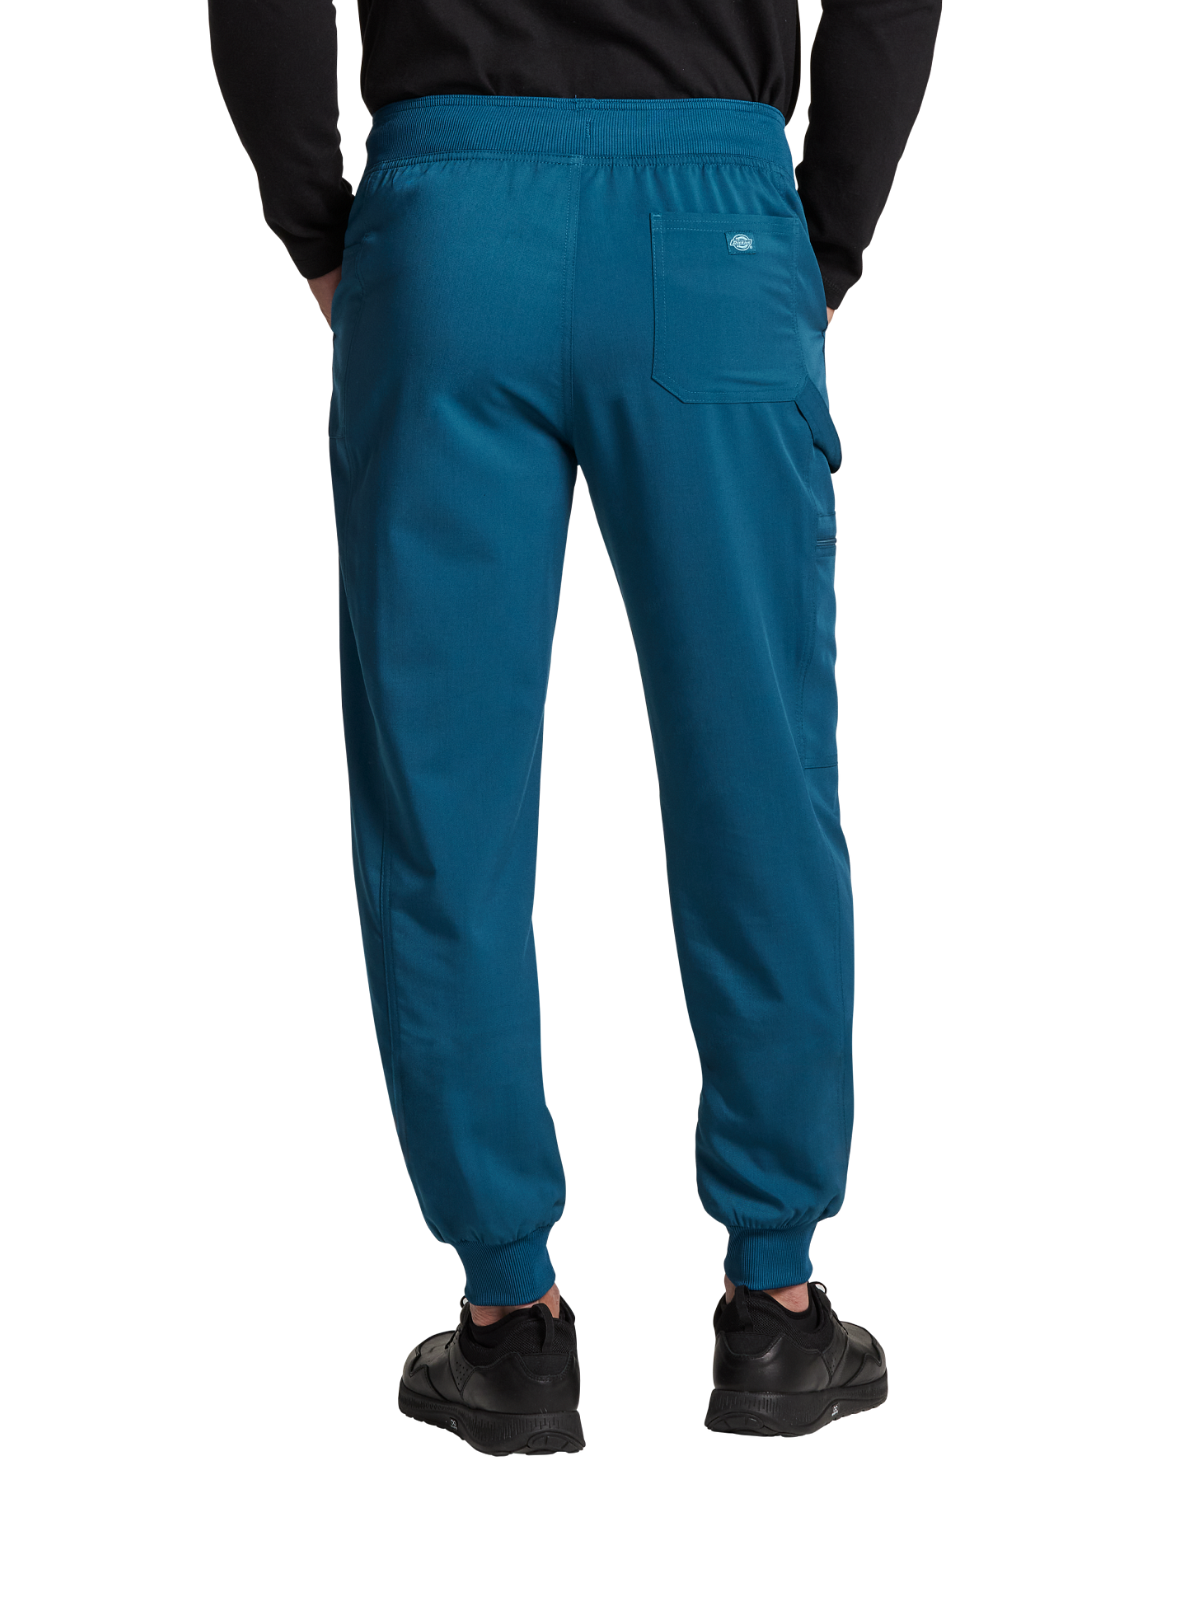 Men's 5-Pocket Tapered Leg Jogger Pant - DK224 - Caribbean Blue